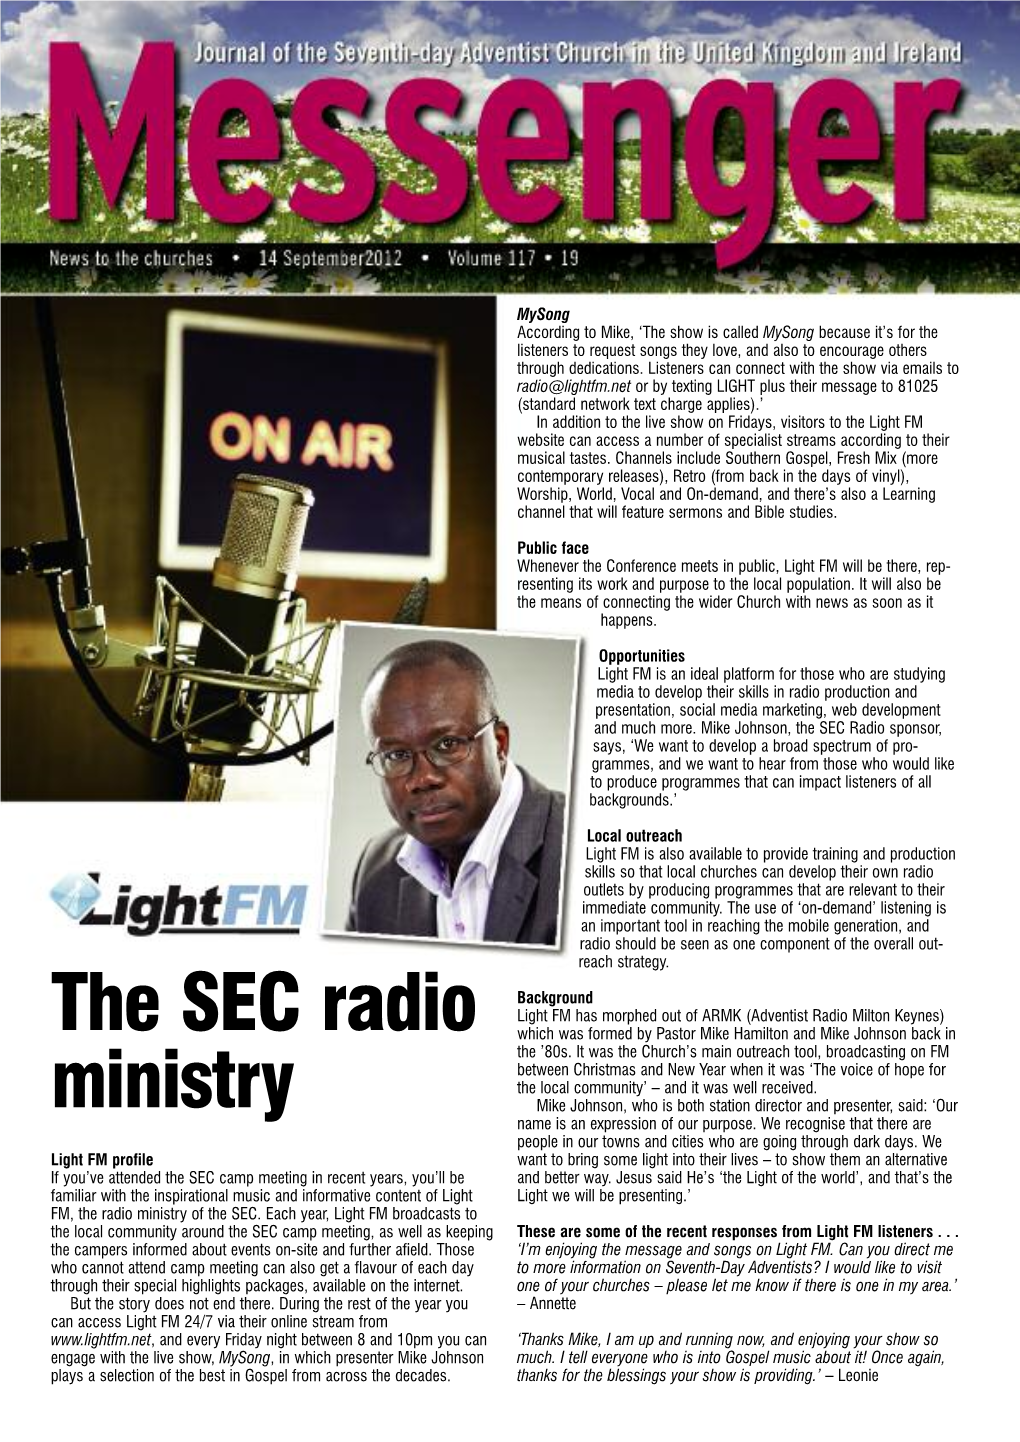 The SEC Radio Ministry